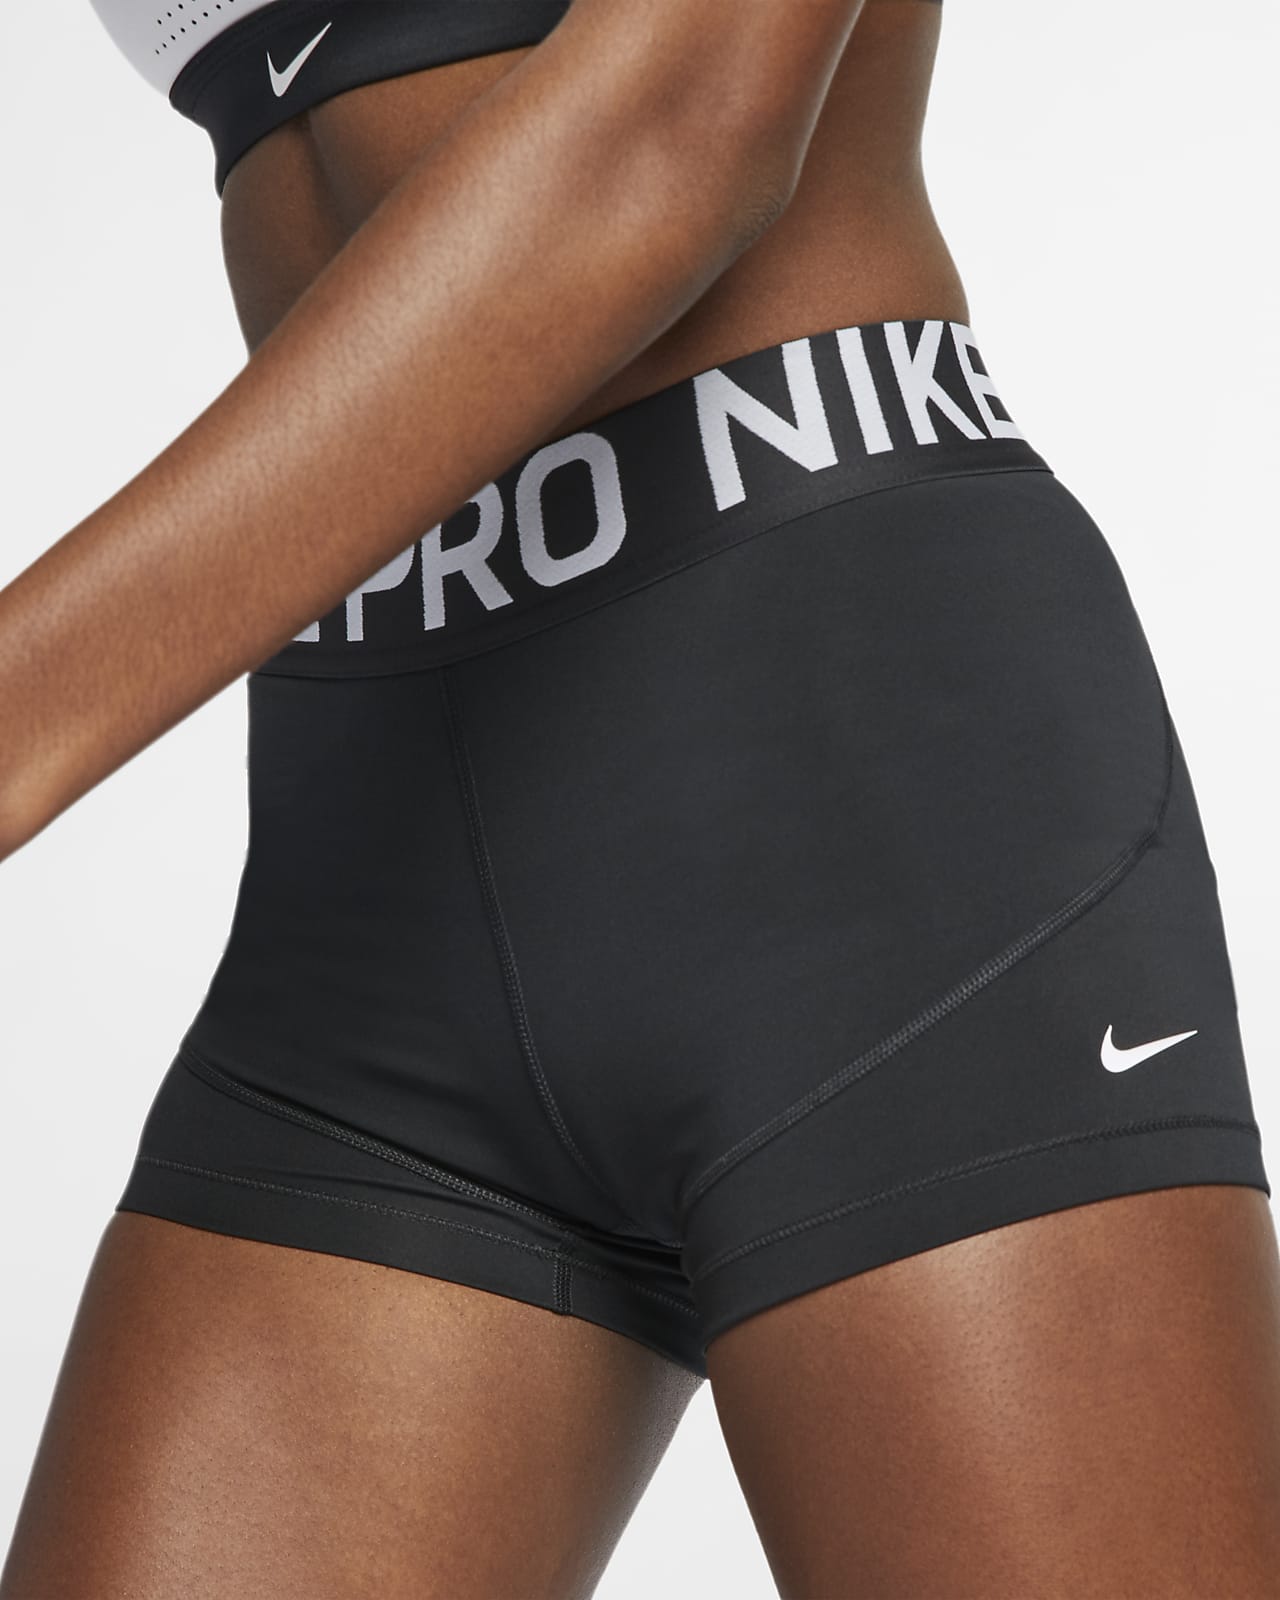 Женские шорты Nike Pro 8 см. Nike RU